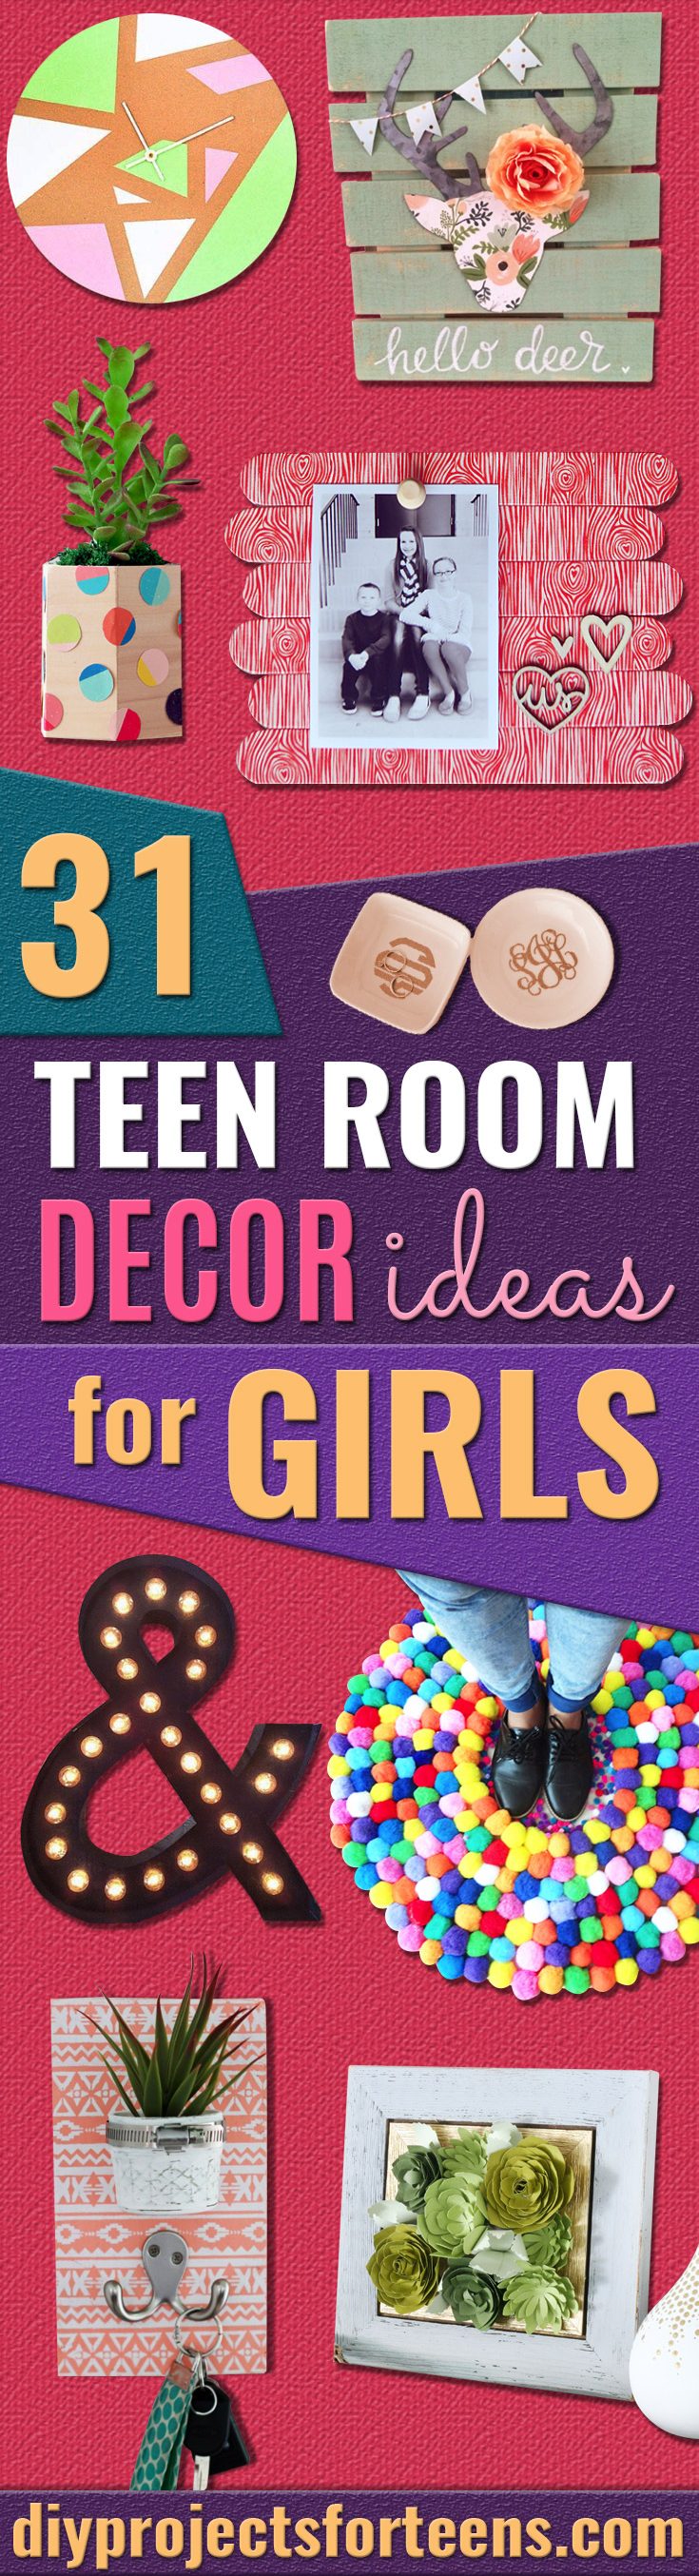 31 Teen Room Decor Ideas for Girls